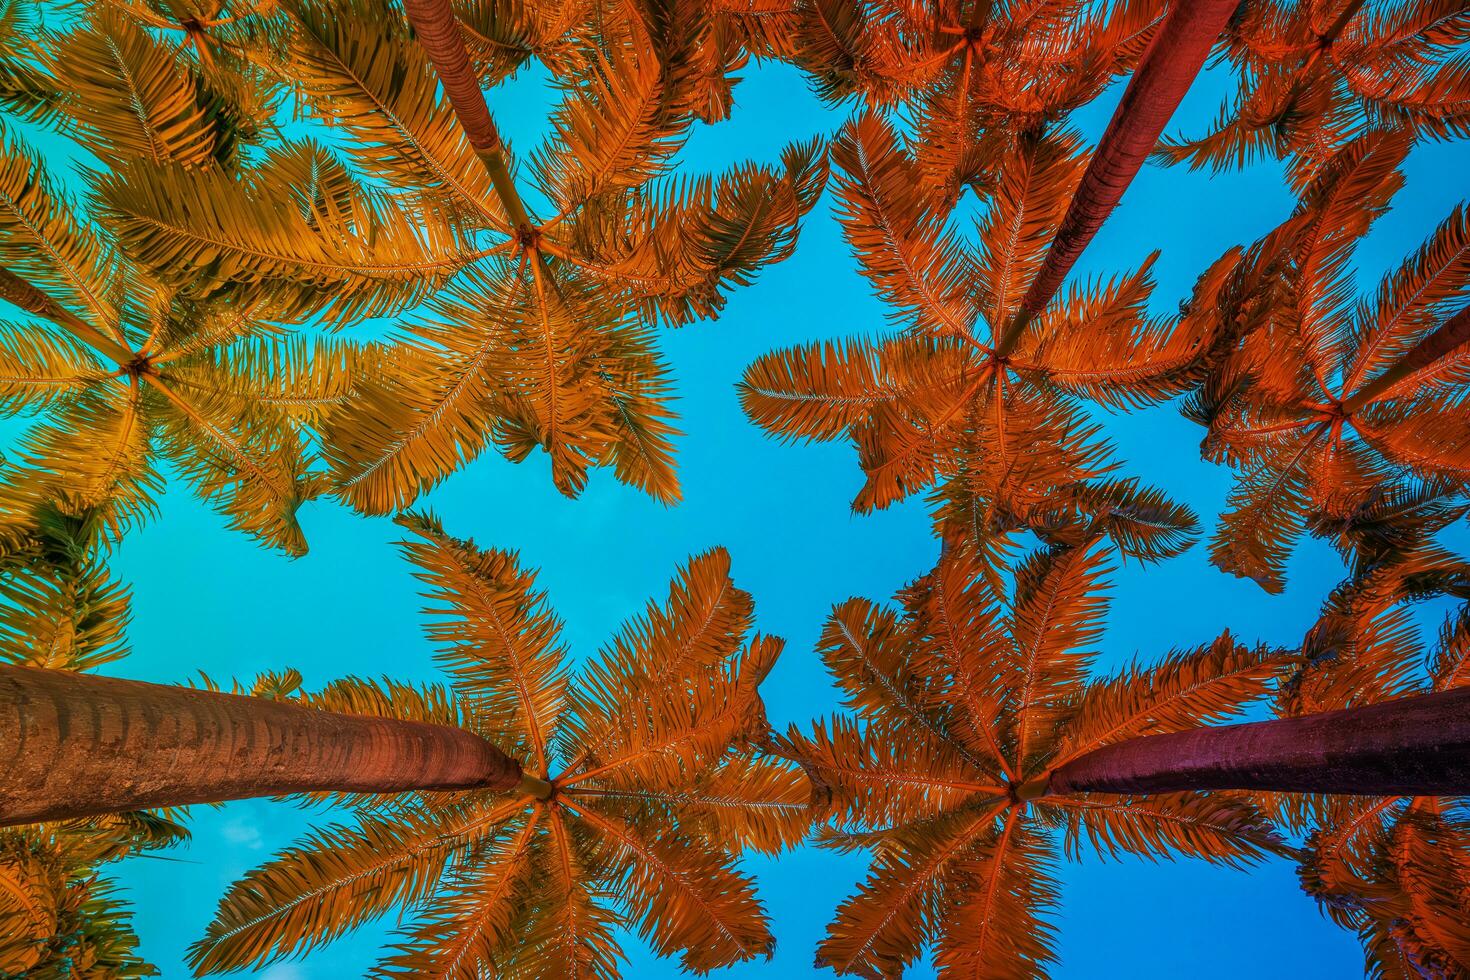 Coco palma arboles con vibrante color vibraciones foto